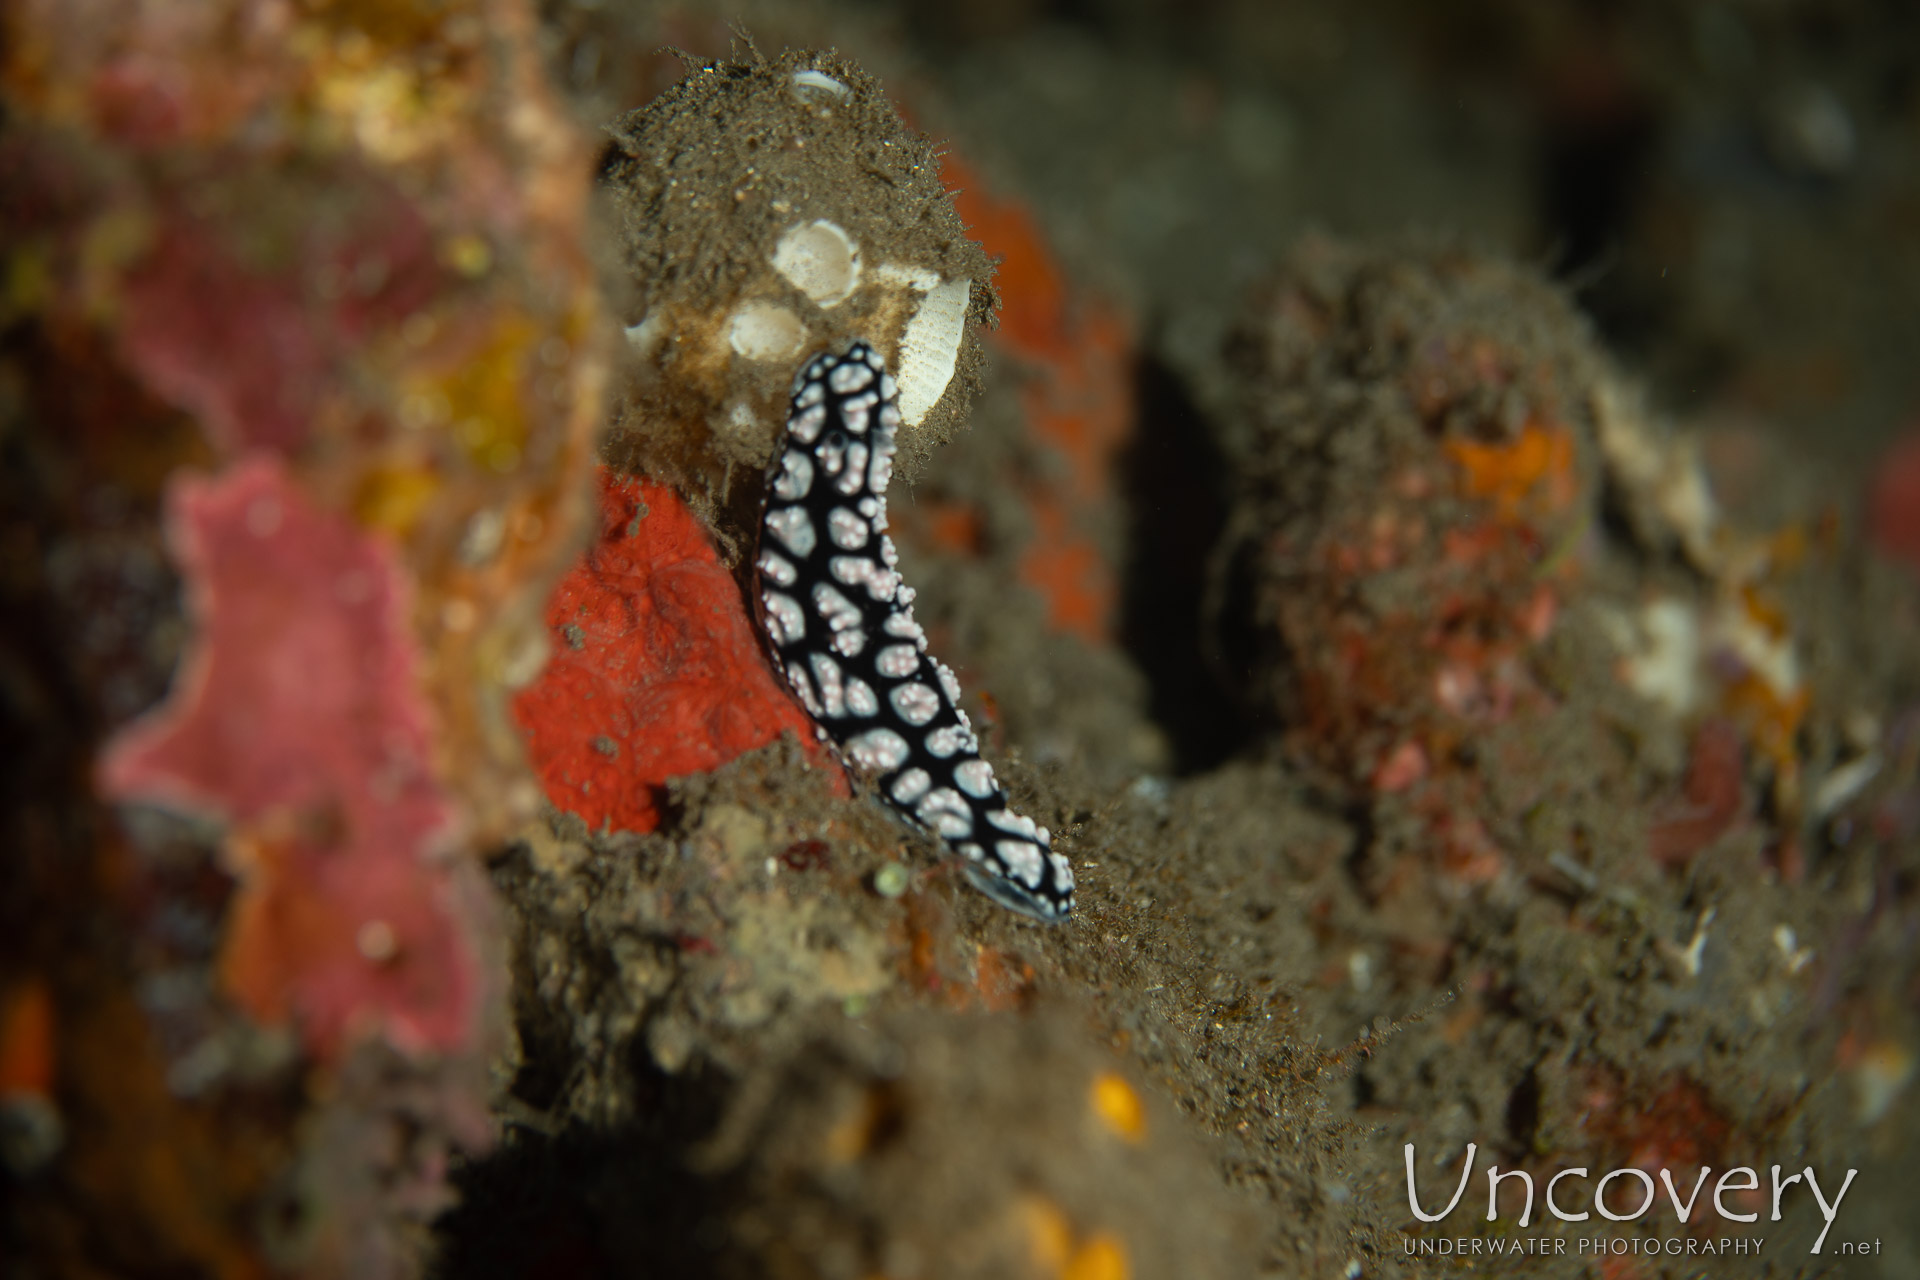 Nudibranch, photo taken in Indonesia, Bali, Tulamben, Emerald